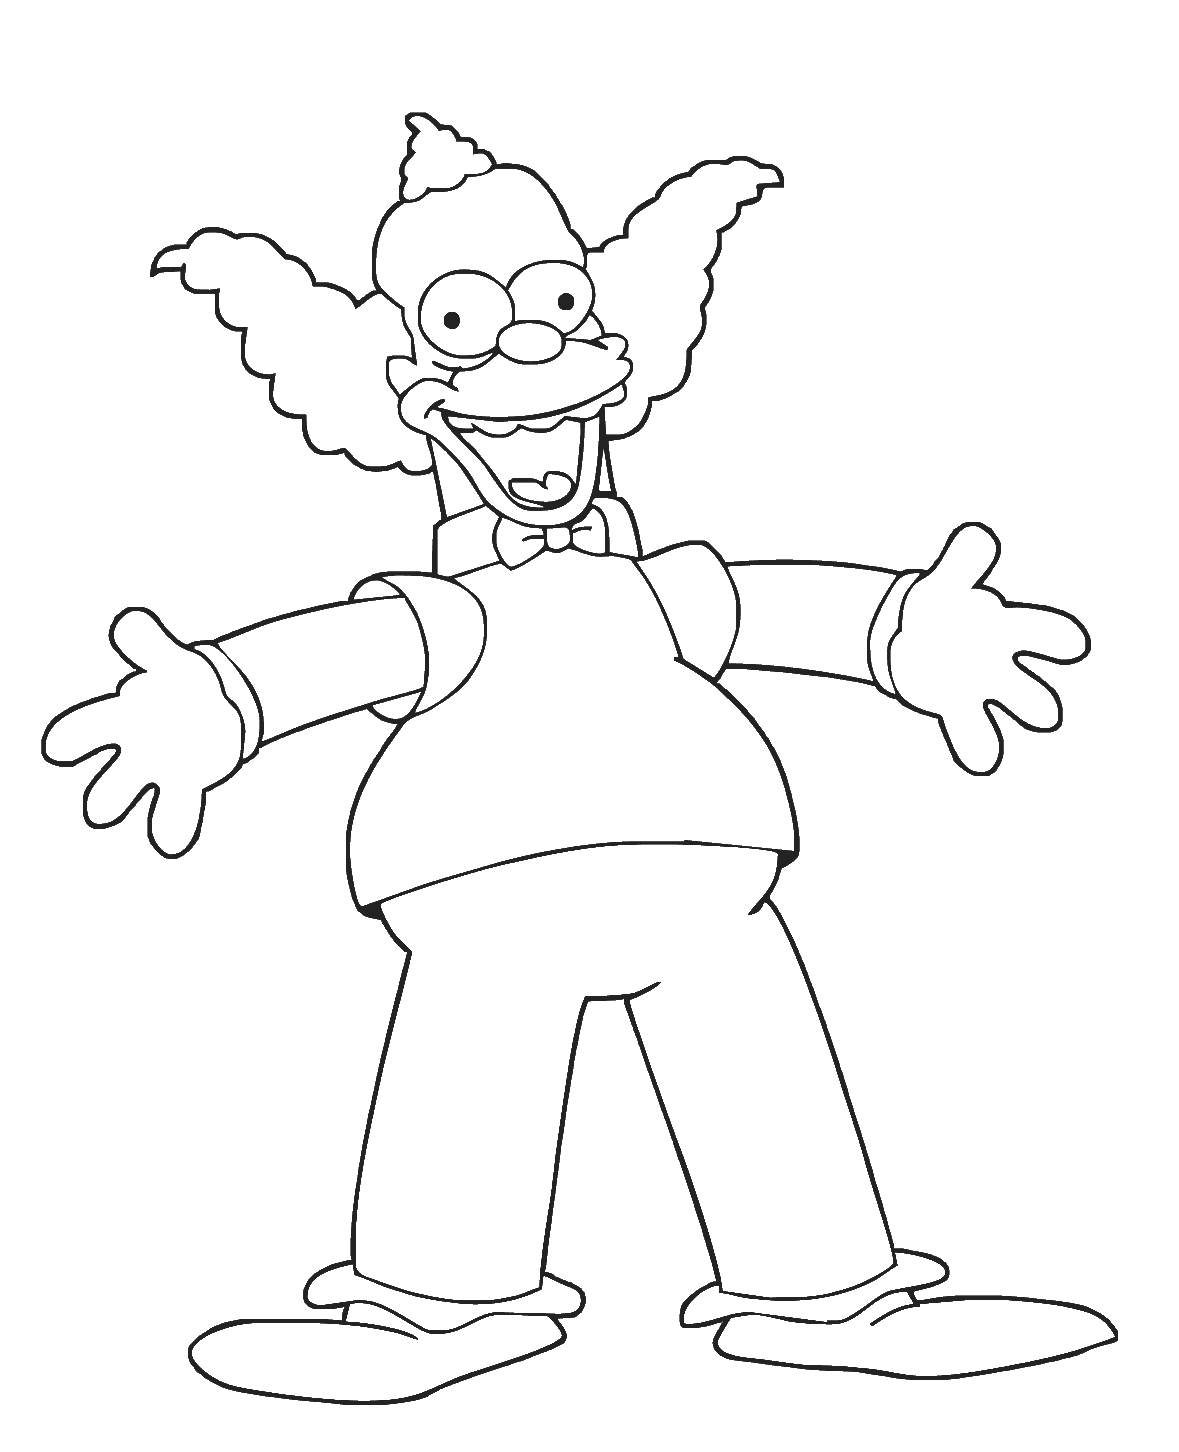 I Simpson - Krusty felice